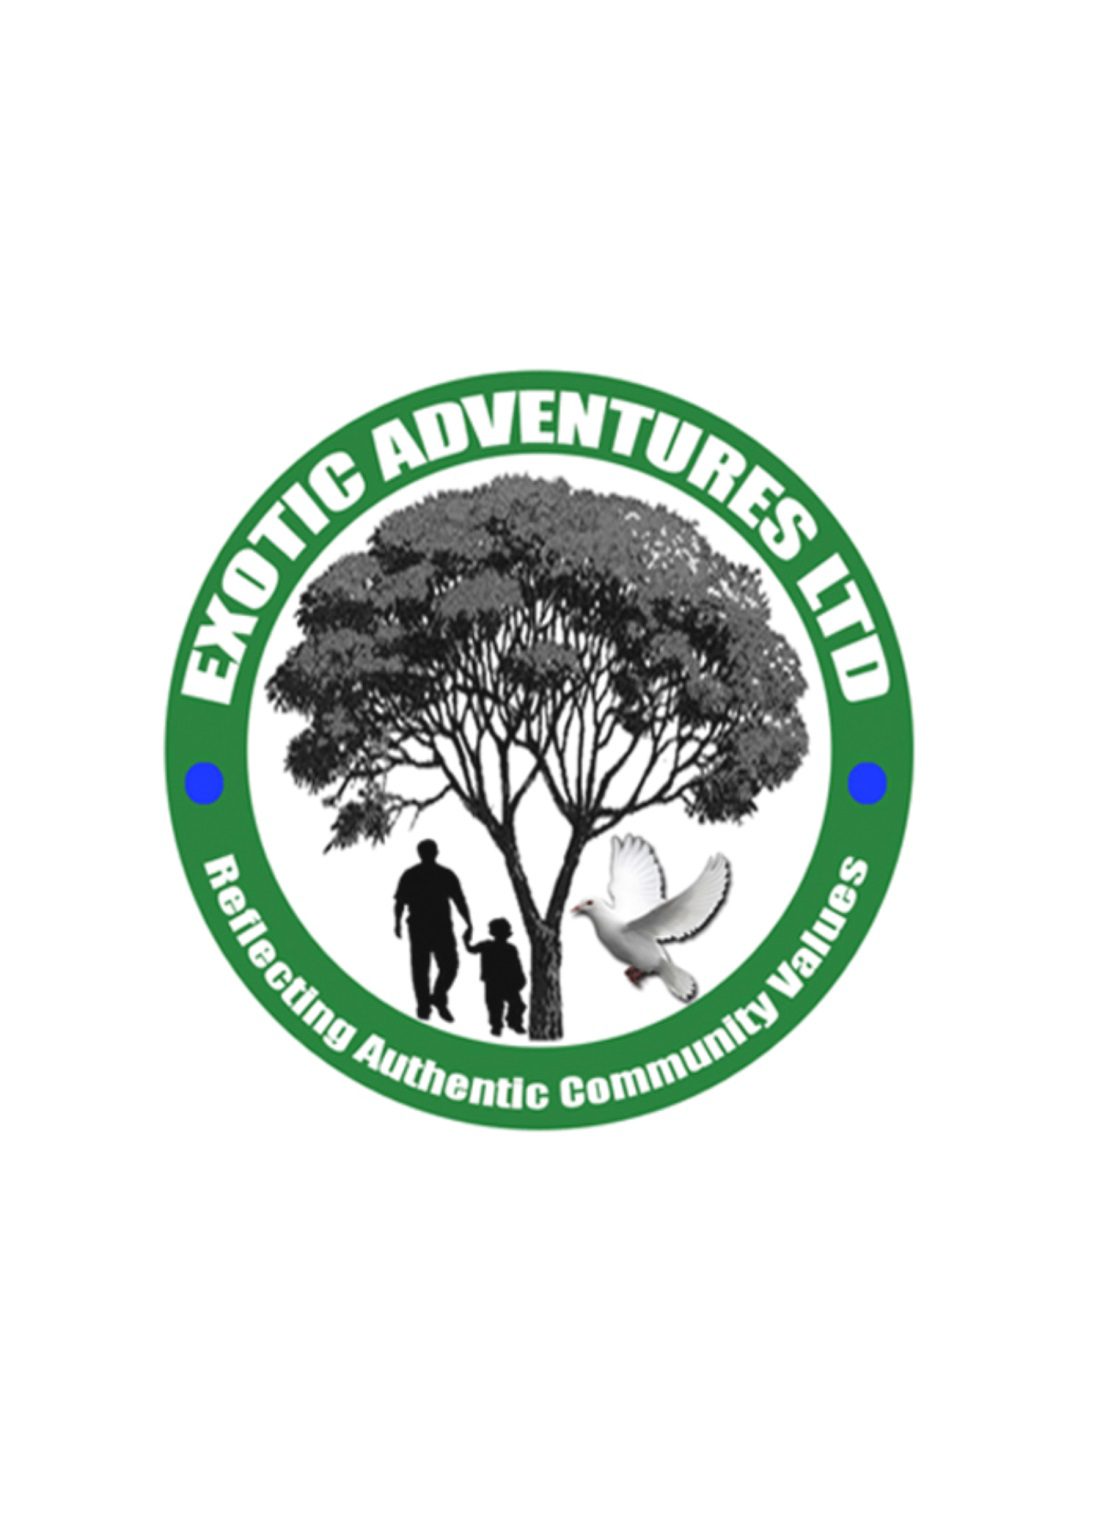 Introducing Exotic Adventures Ltd: Reflecting Authentic Community Values!